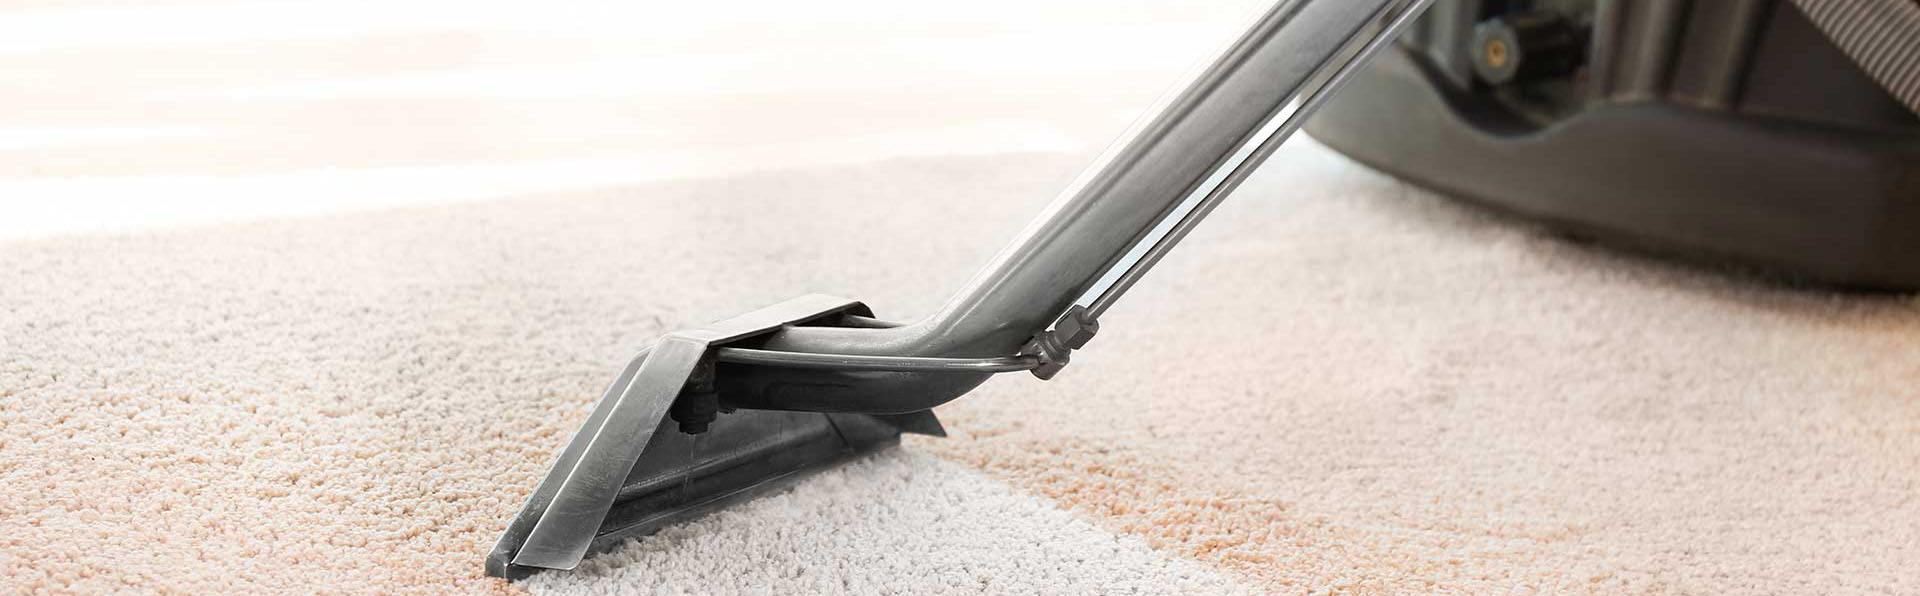 fibercare dallas professional carpet cleaning